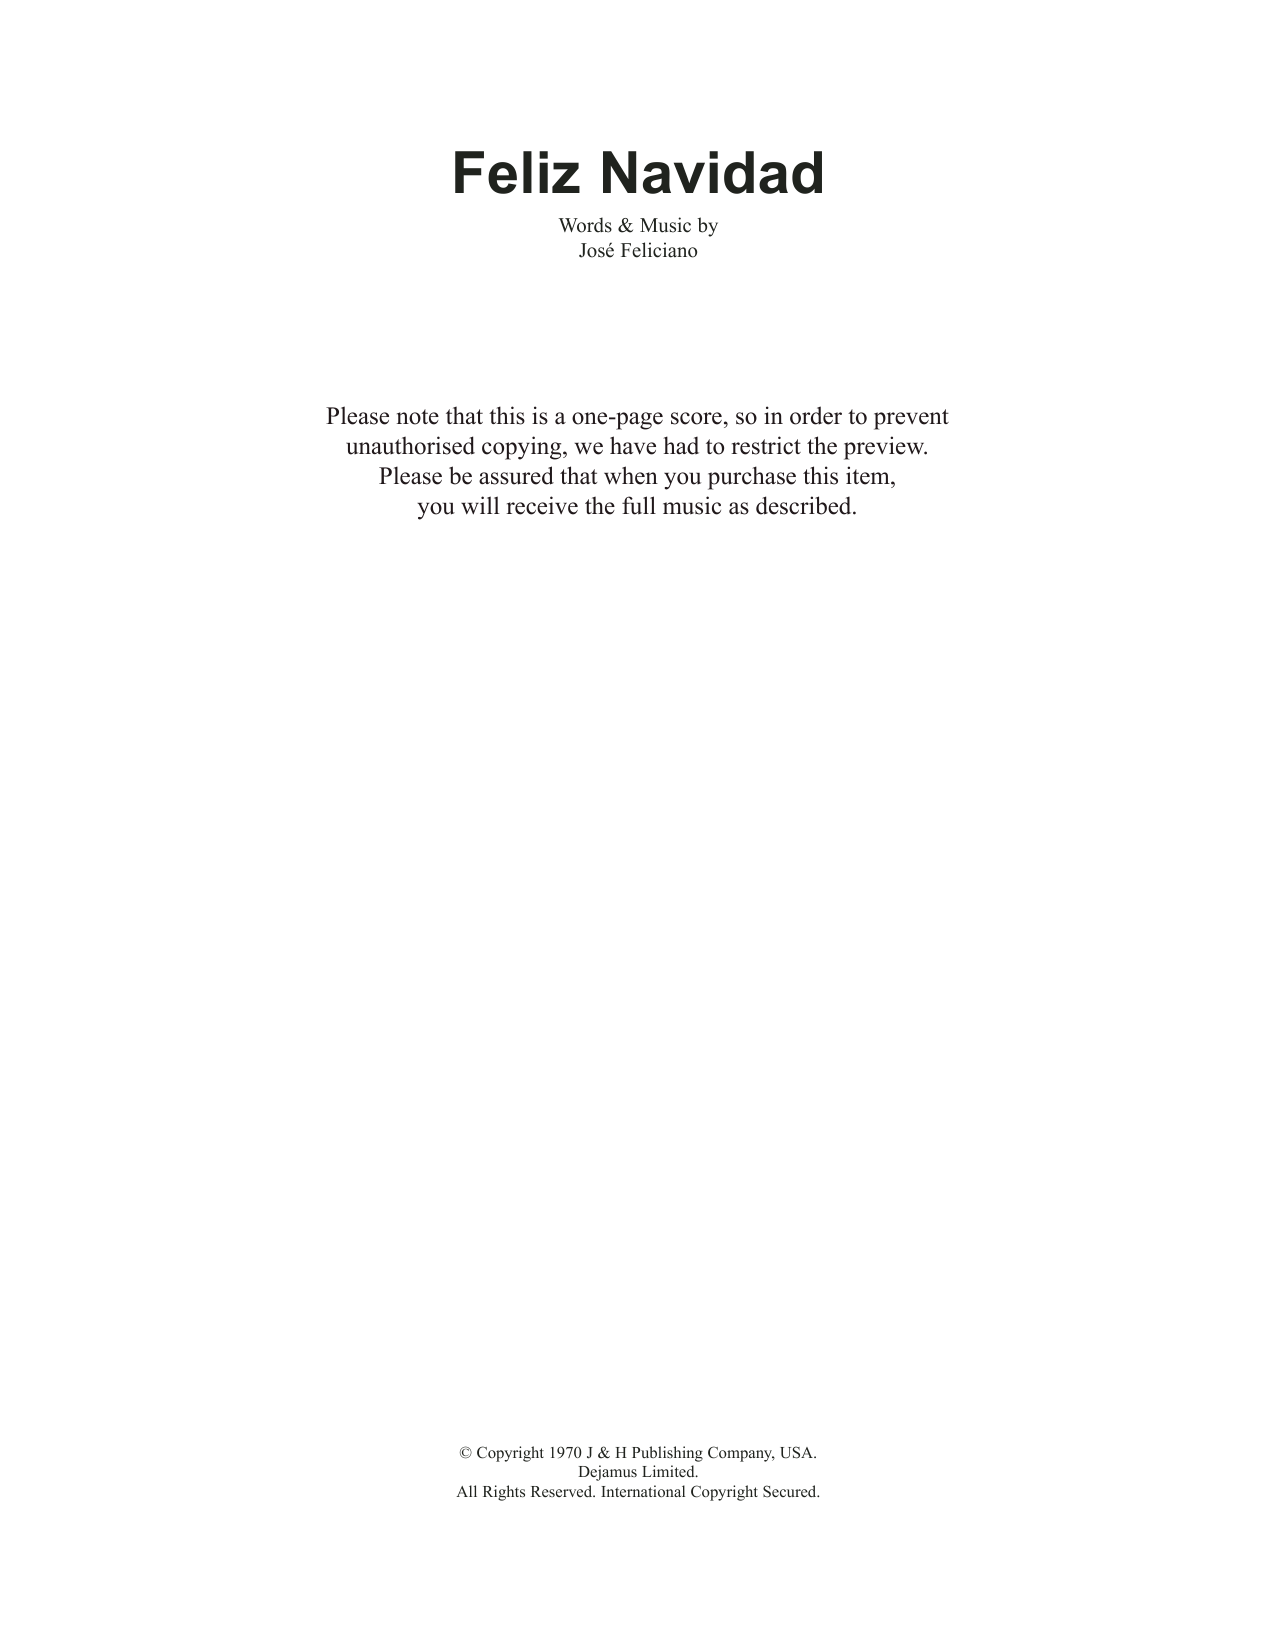 Jose Feliciano Feliz Navidad Sheet Music Notes & Chords for Super Easy Piano - Download or Print PDF